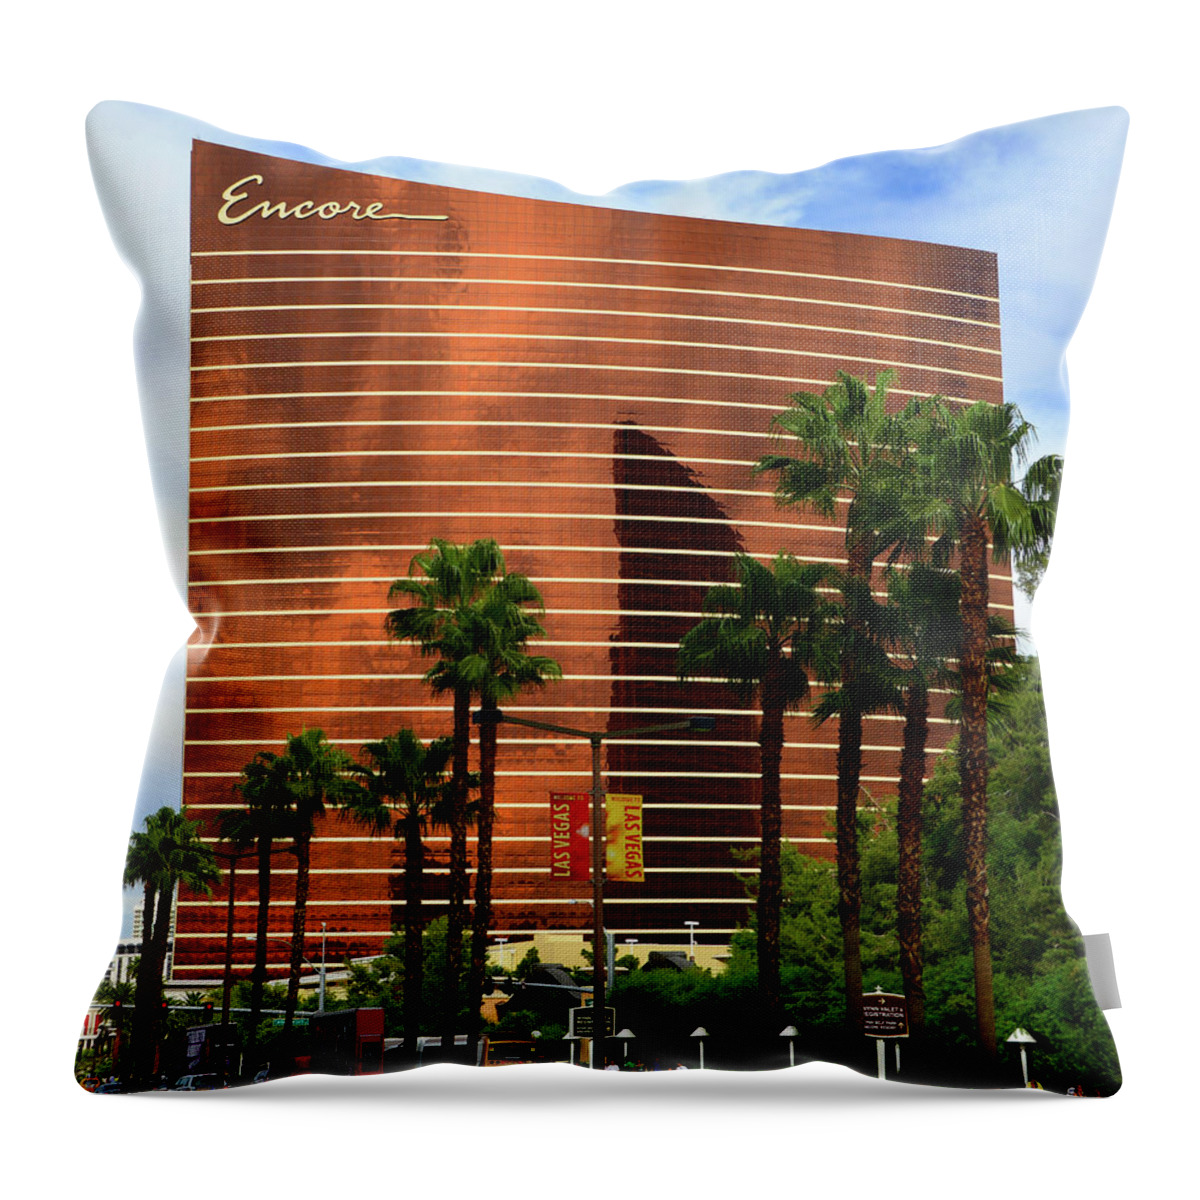 Las Vegas Nevada Throw Pillow featuring the photograph Encore Vegas by David Lee Thompson